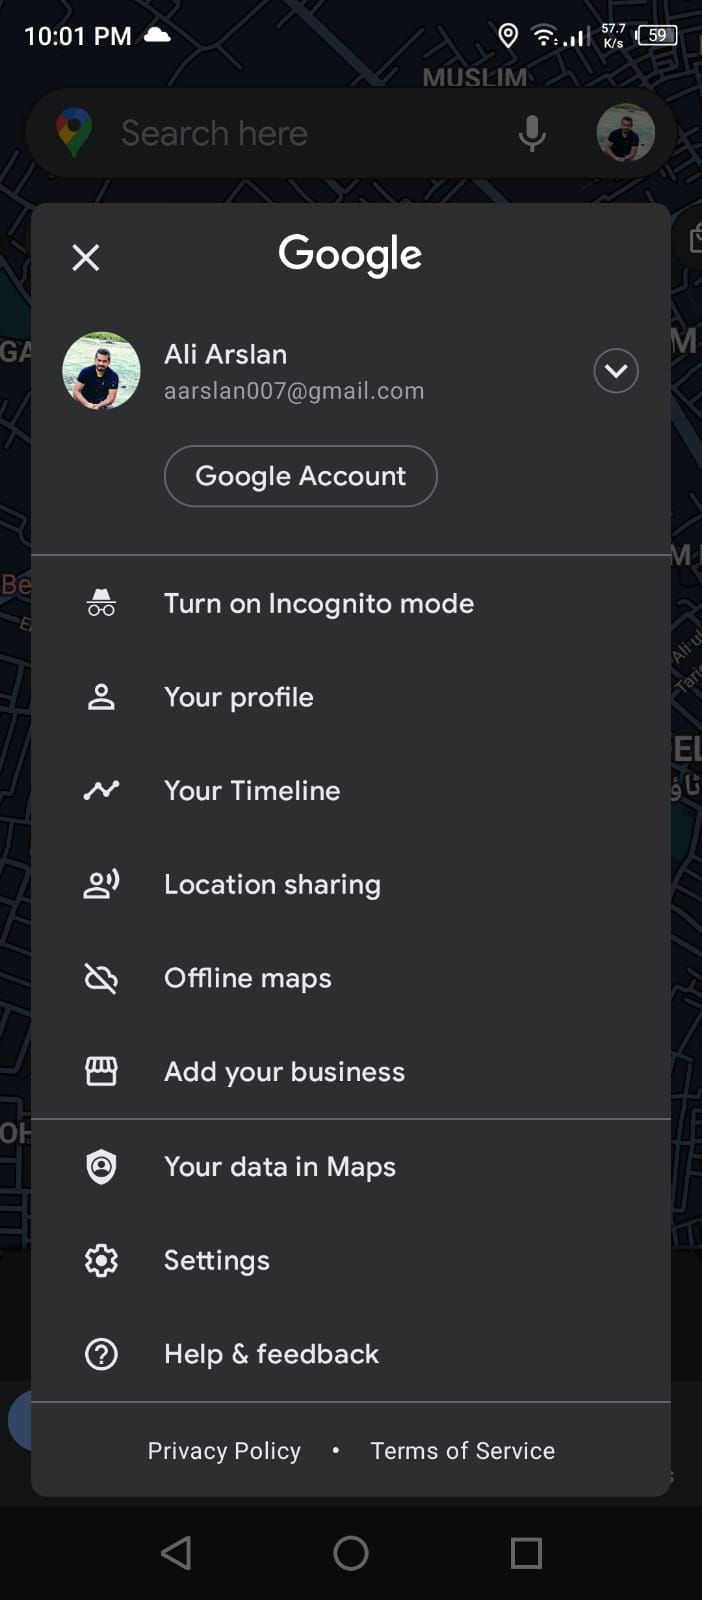 Main Settings Menu in the Google Maps App